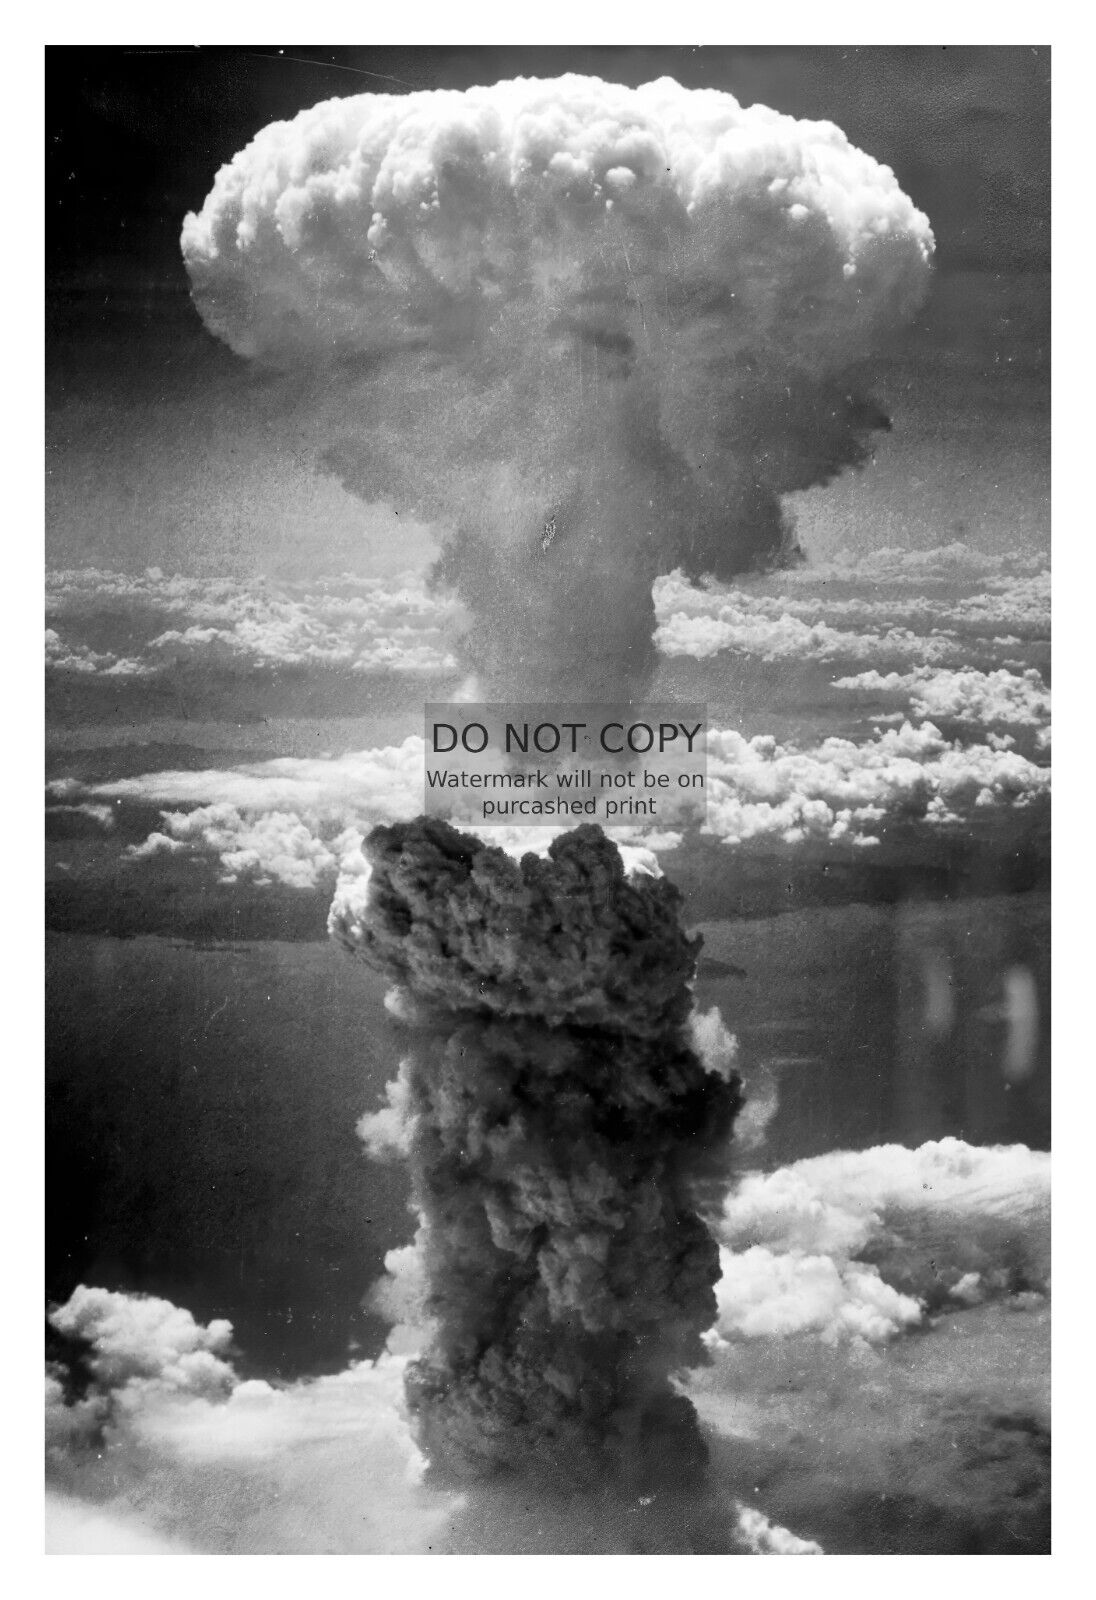 NUCLEAR EXPLOSION MUSHROOM CLOUD OVER NAGASAKI WW2 4X6 PHOTO